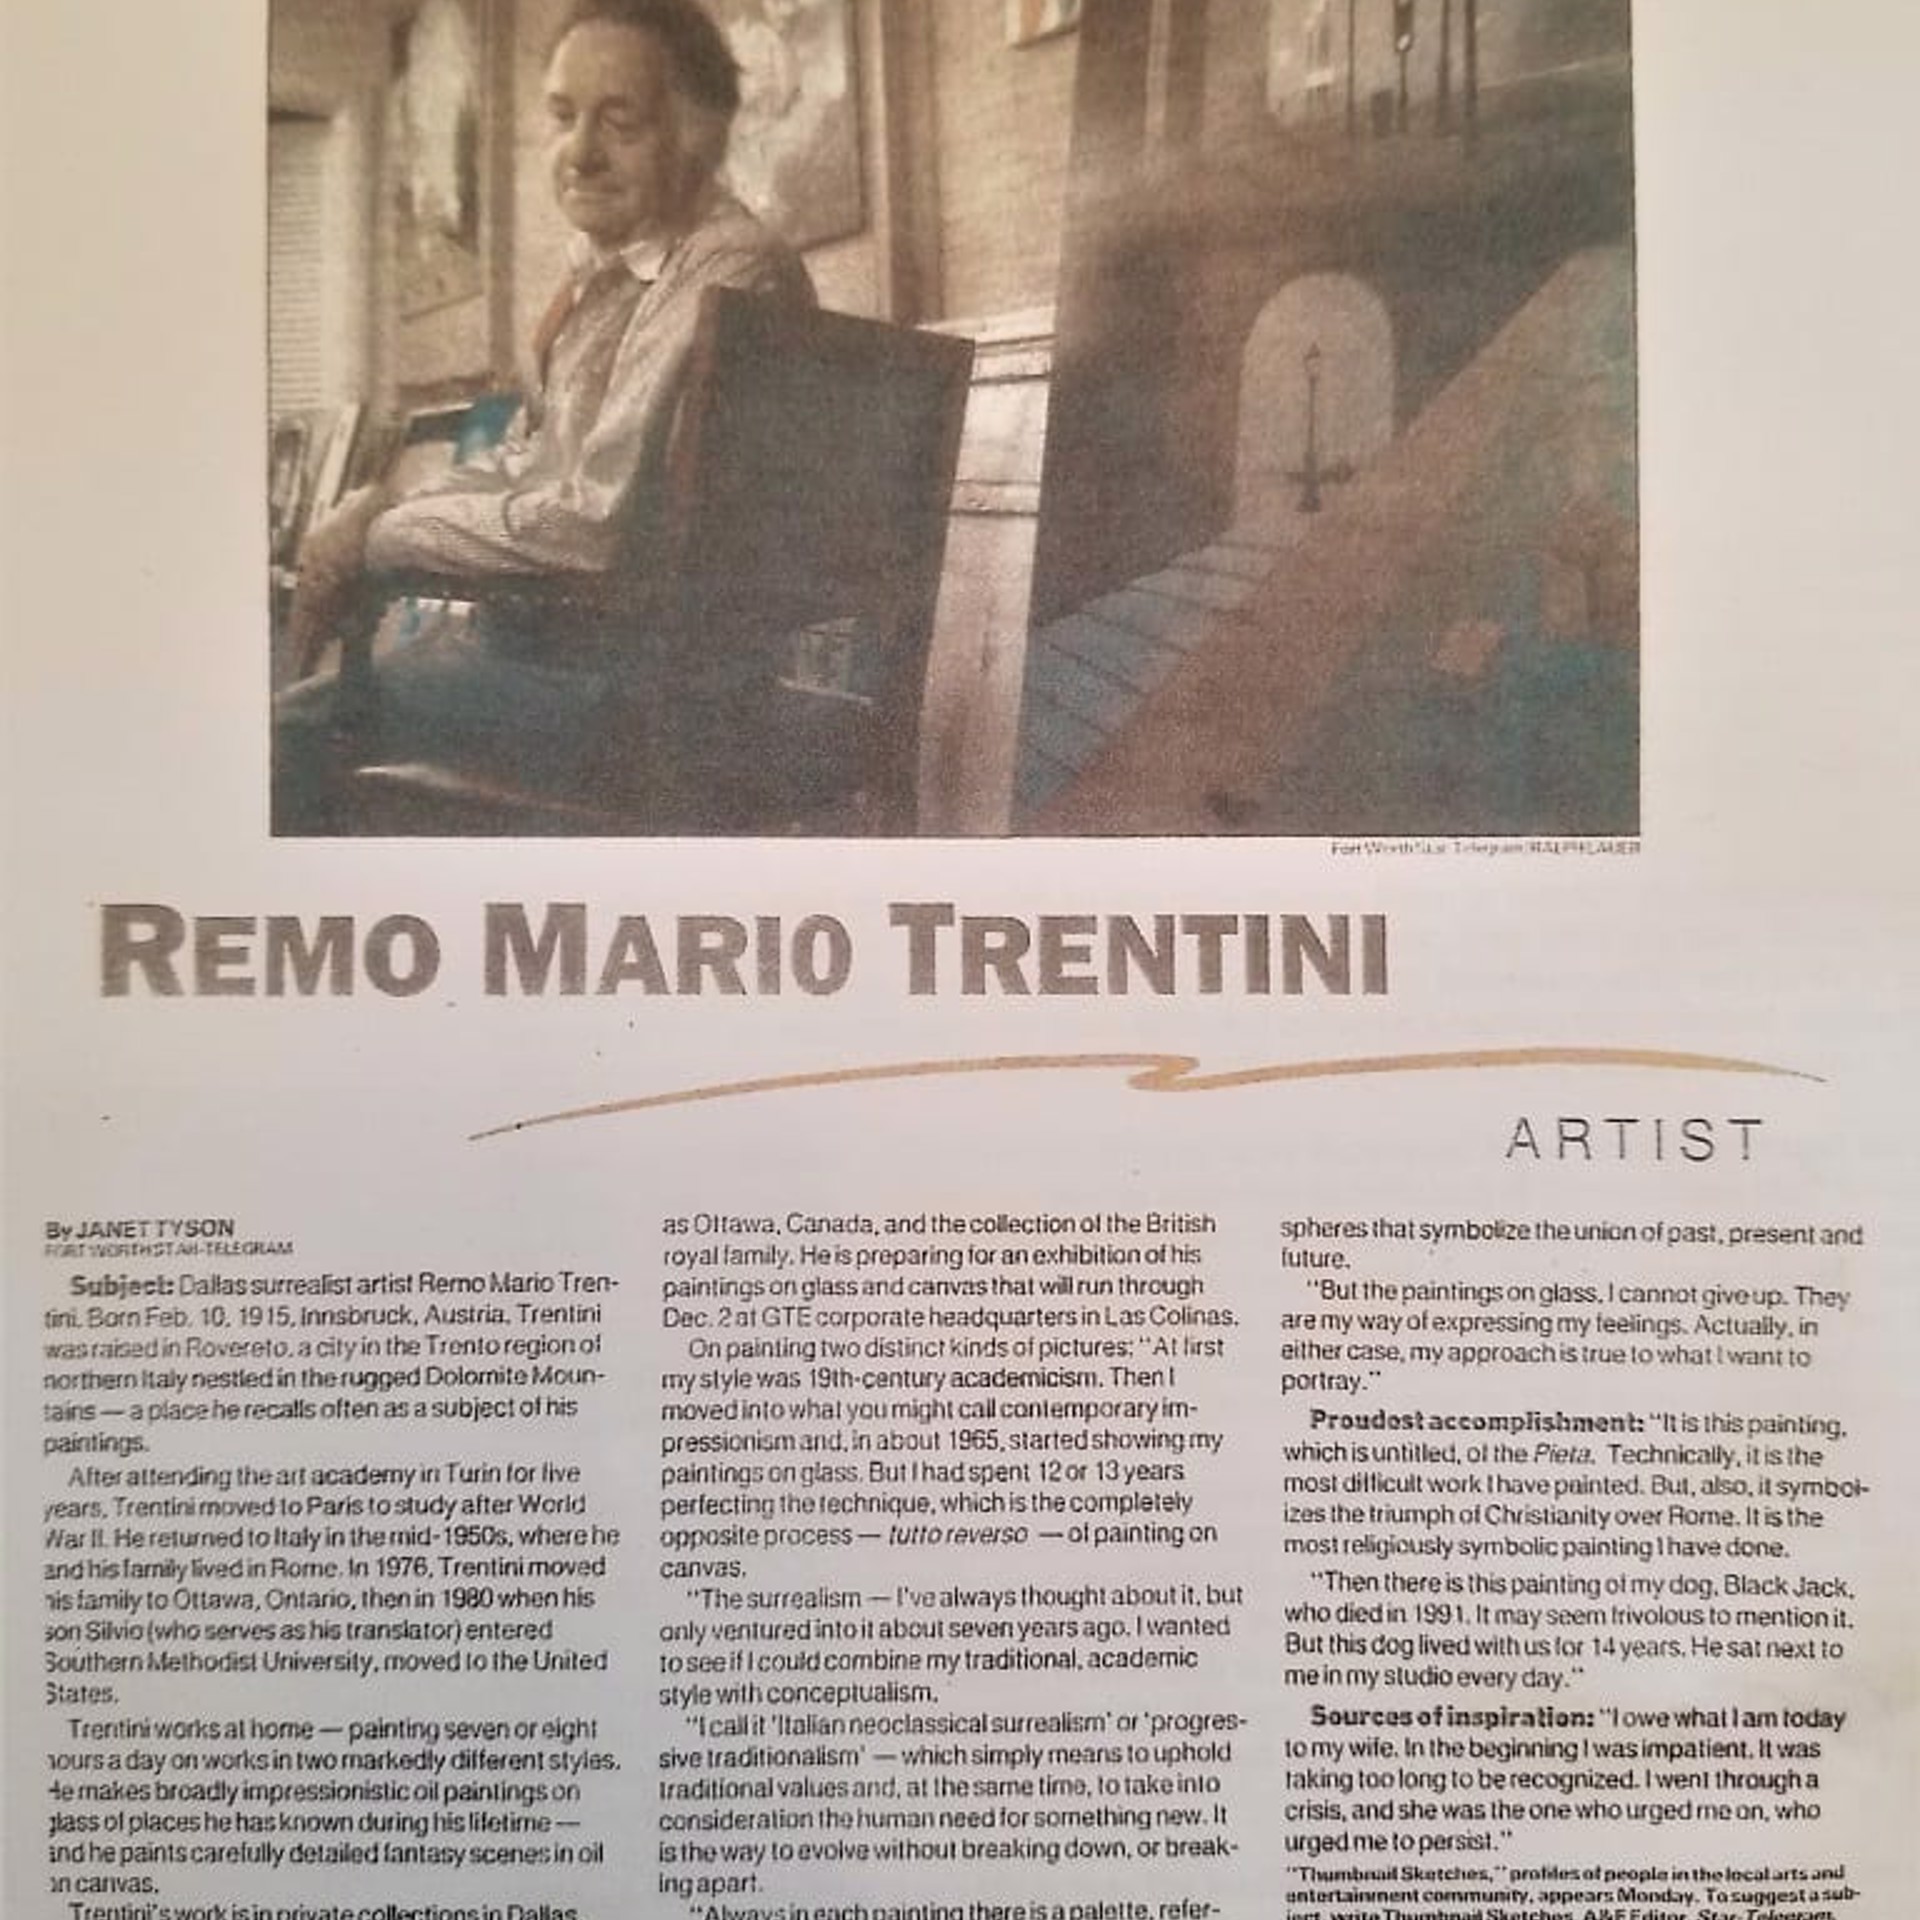 Remo Mario Trentini